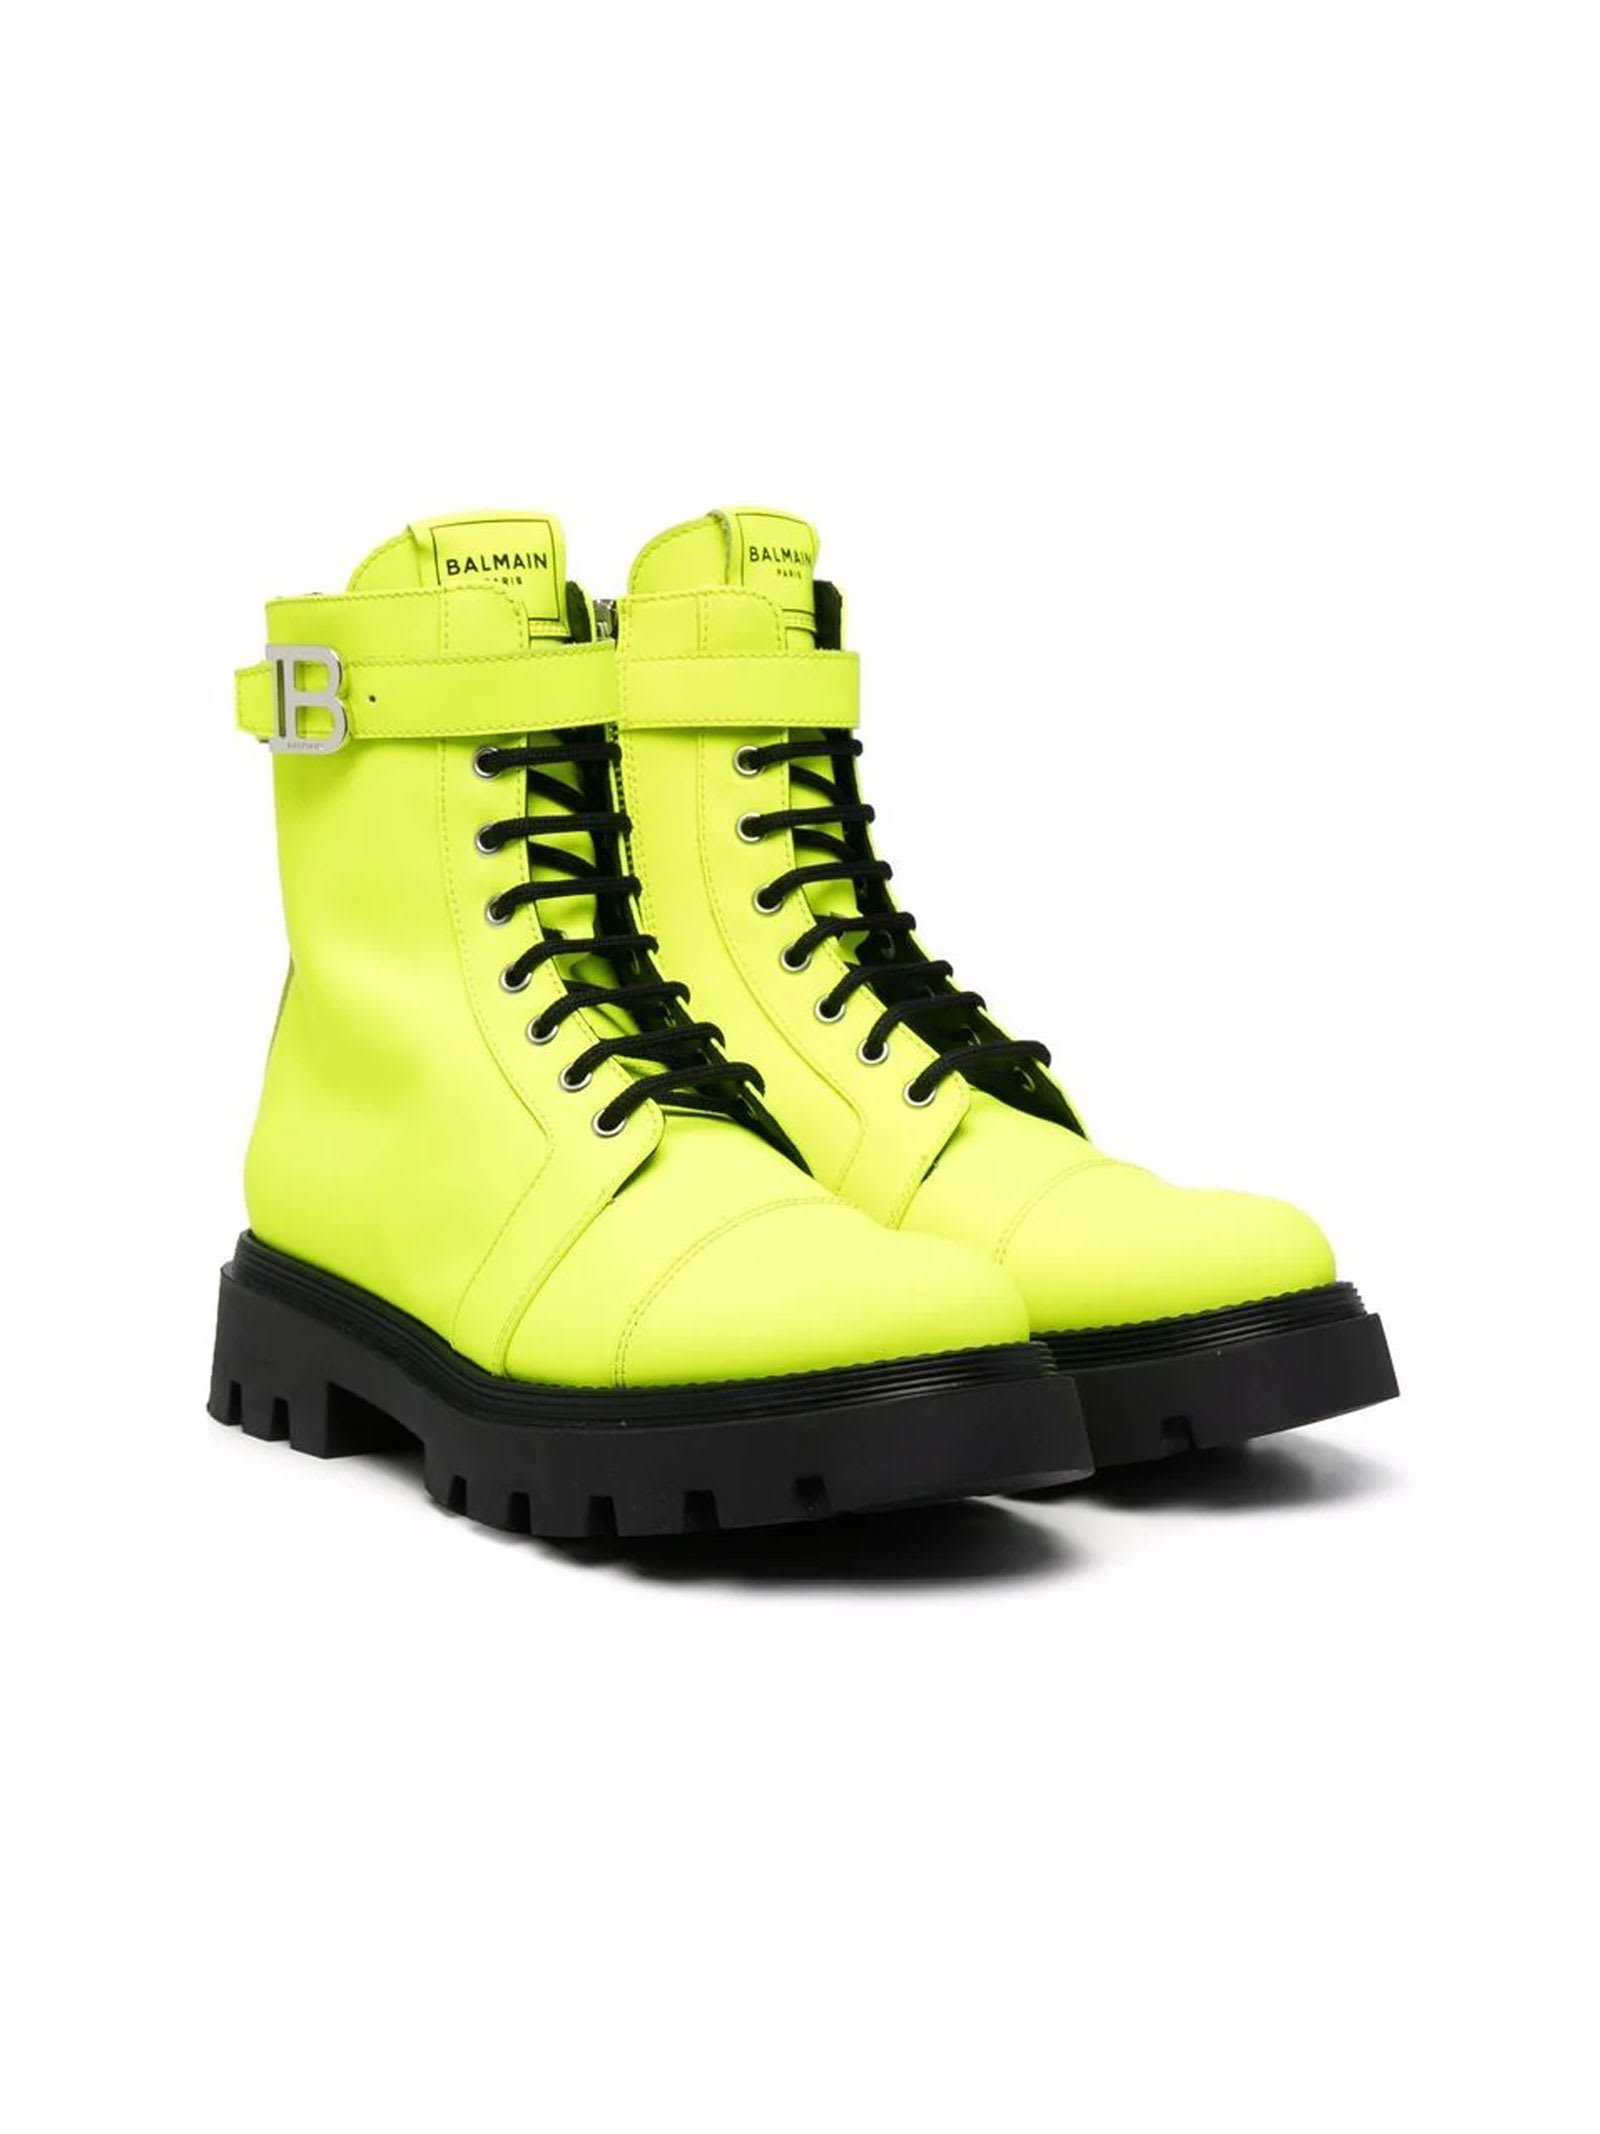 Balmain Yellow Leather Boots